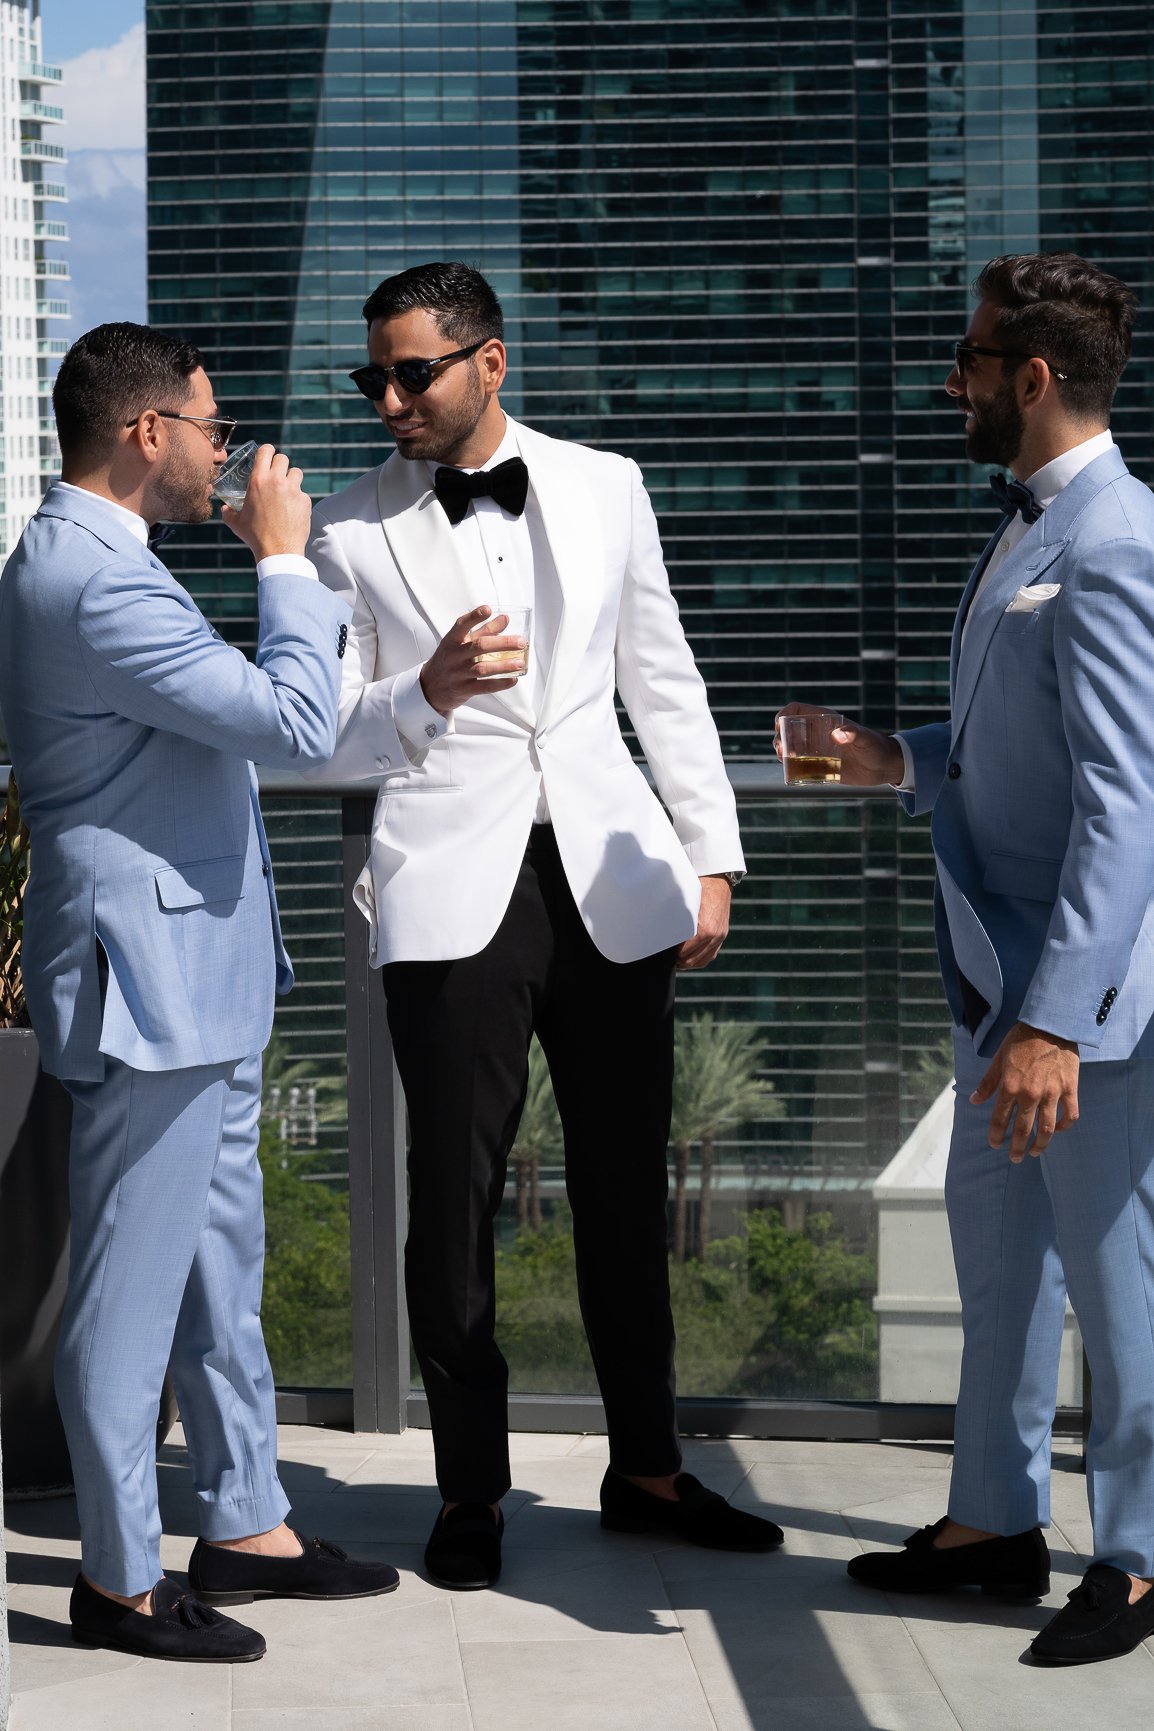 SLS Brickell Miami Wedding | Dipp Photography | Miami Wedding Photographer